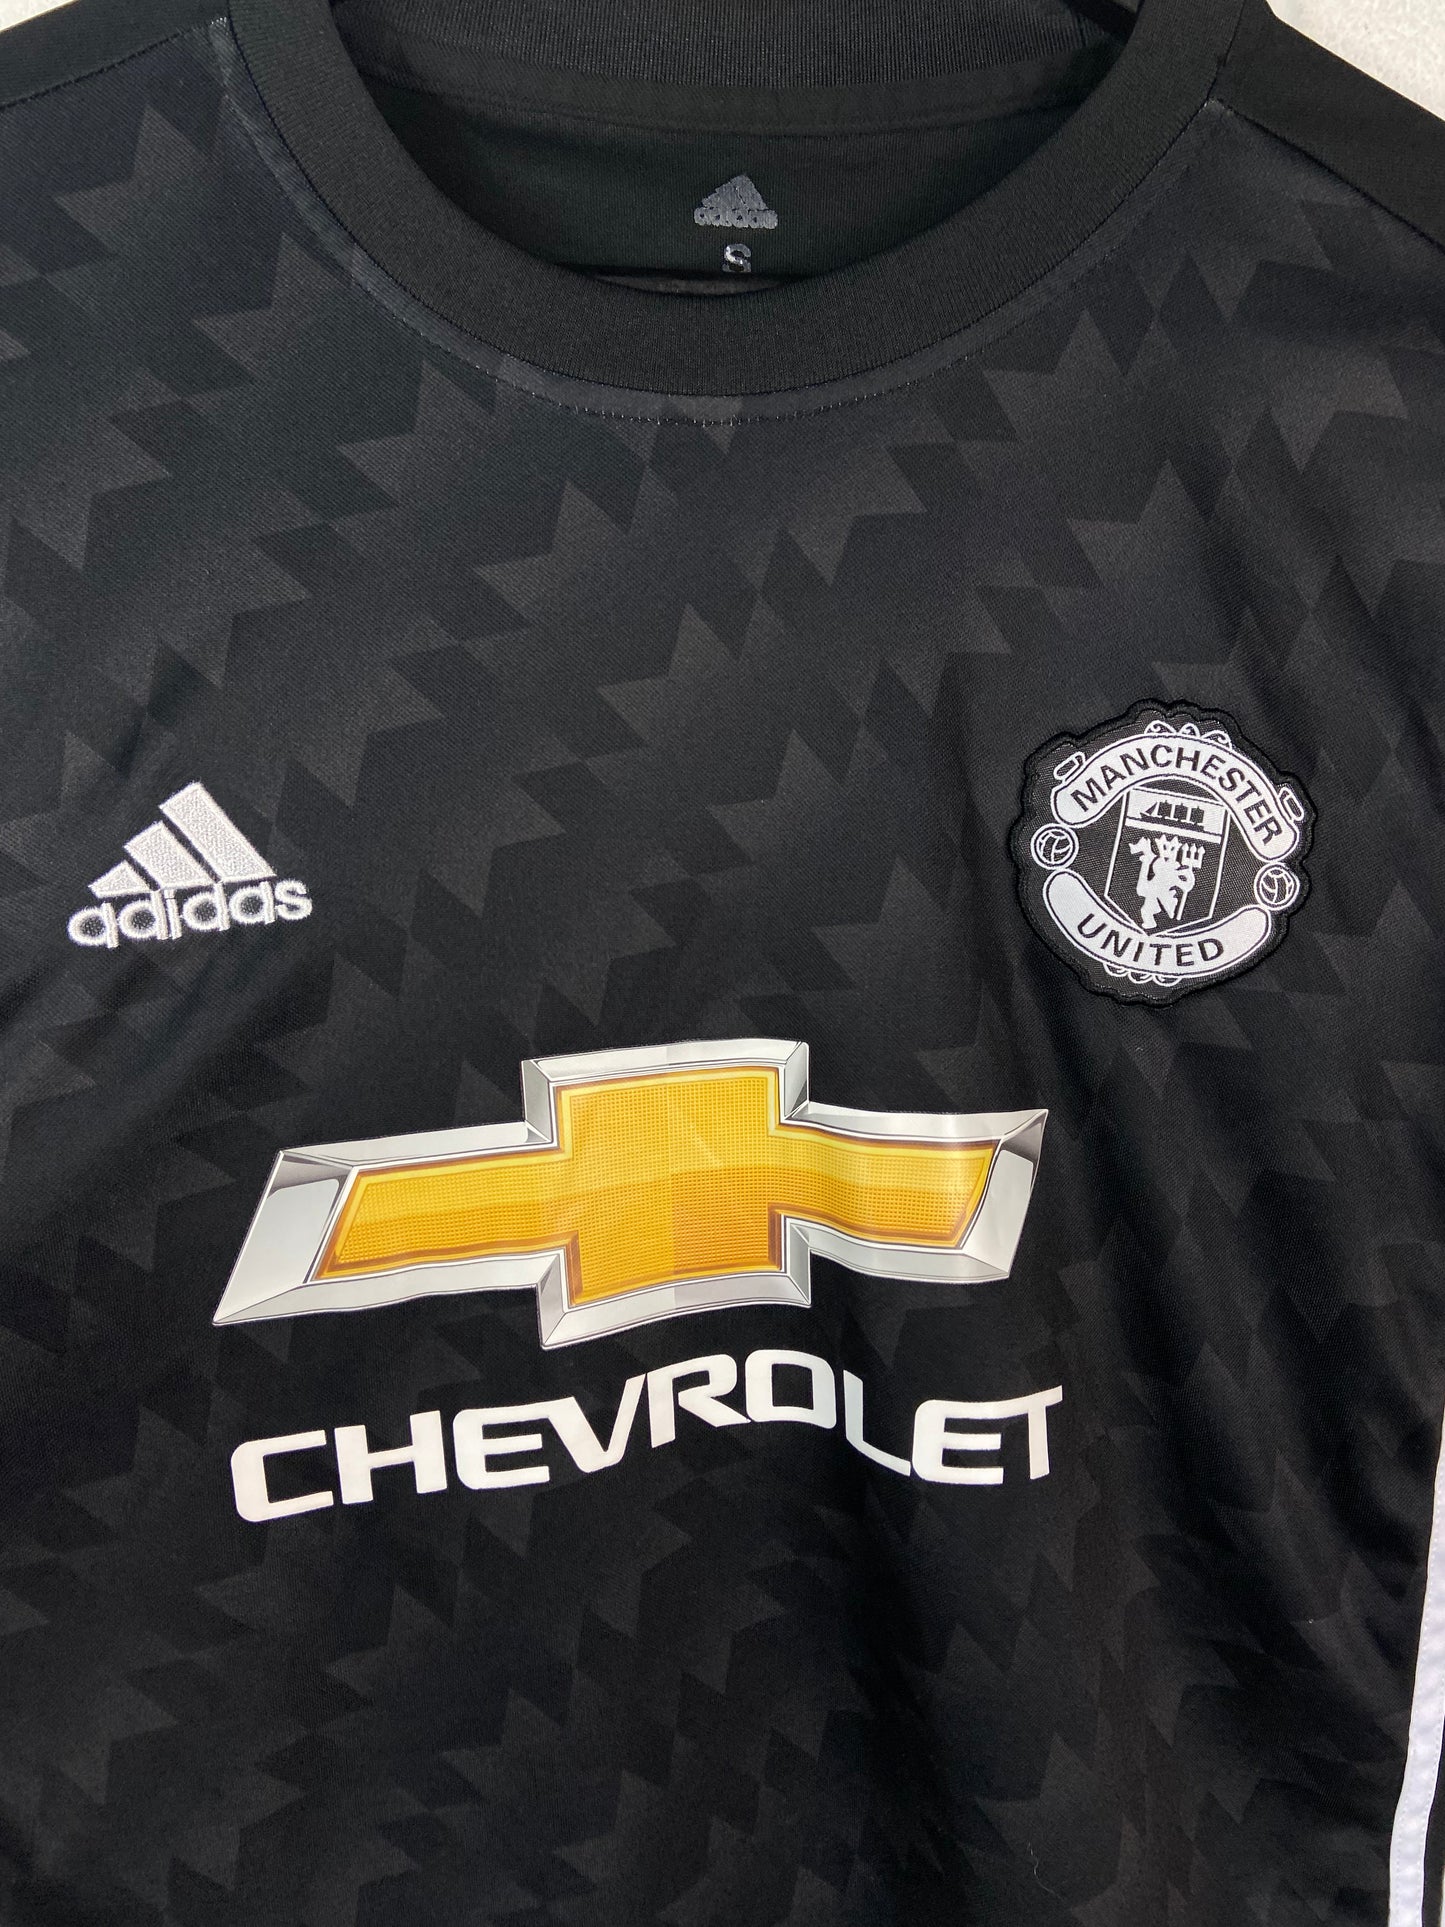 Adidas Manchester United Chevrolet Black Away Soccer Jersey Sz S